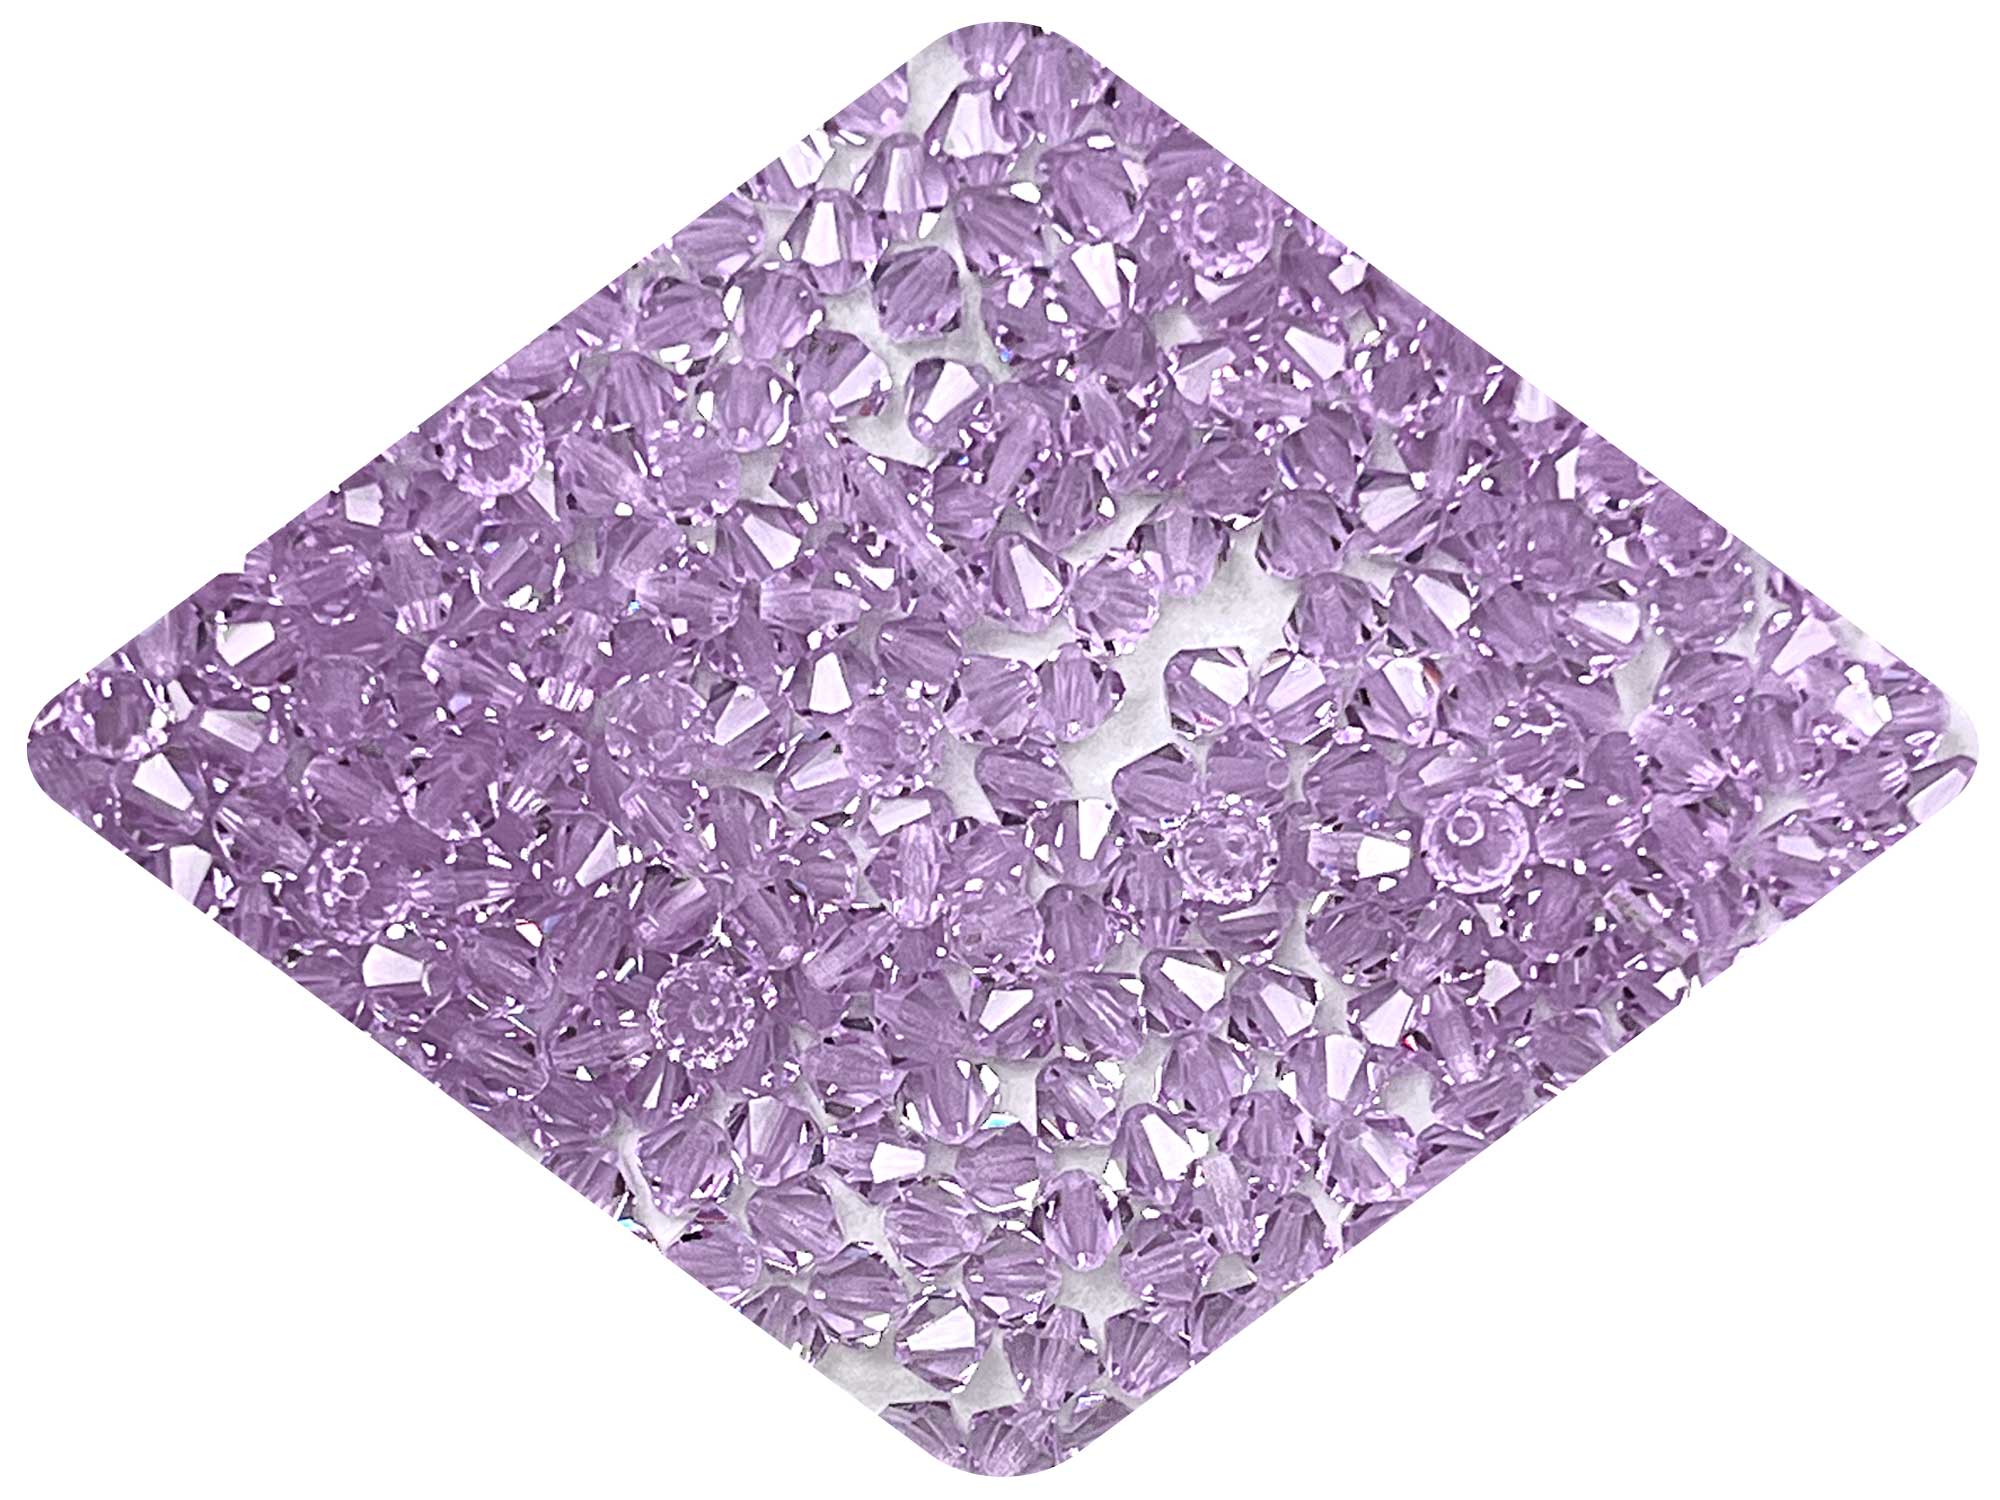 Violet, Czech Glass Beads, Machine Cut Bicones (MC Rondell, Diamond Shape), transparent rich purple crystals